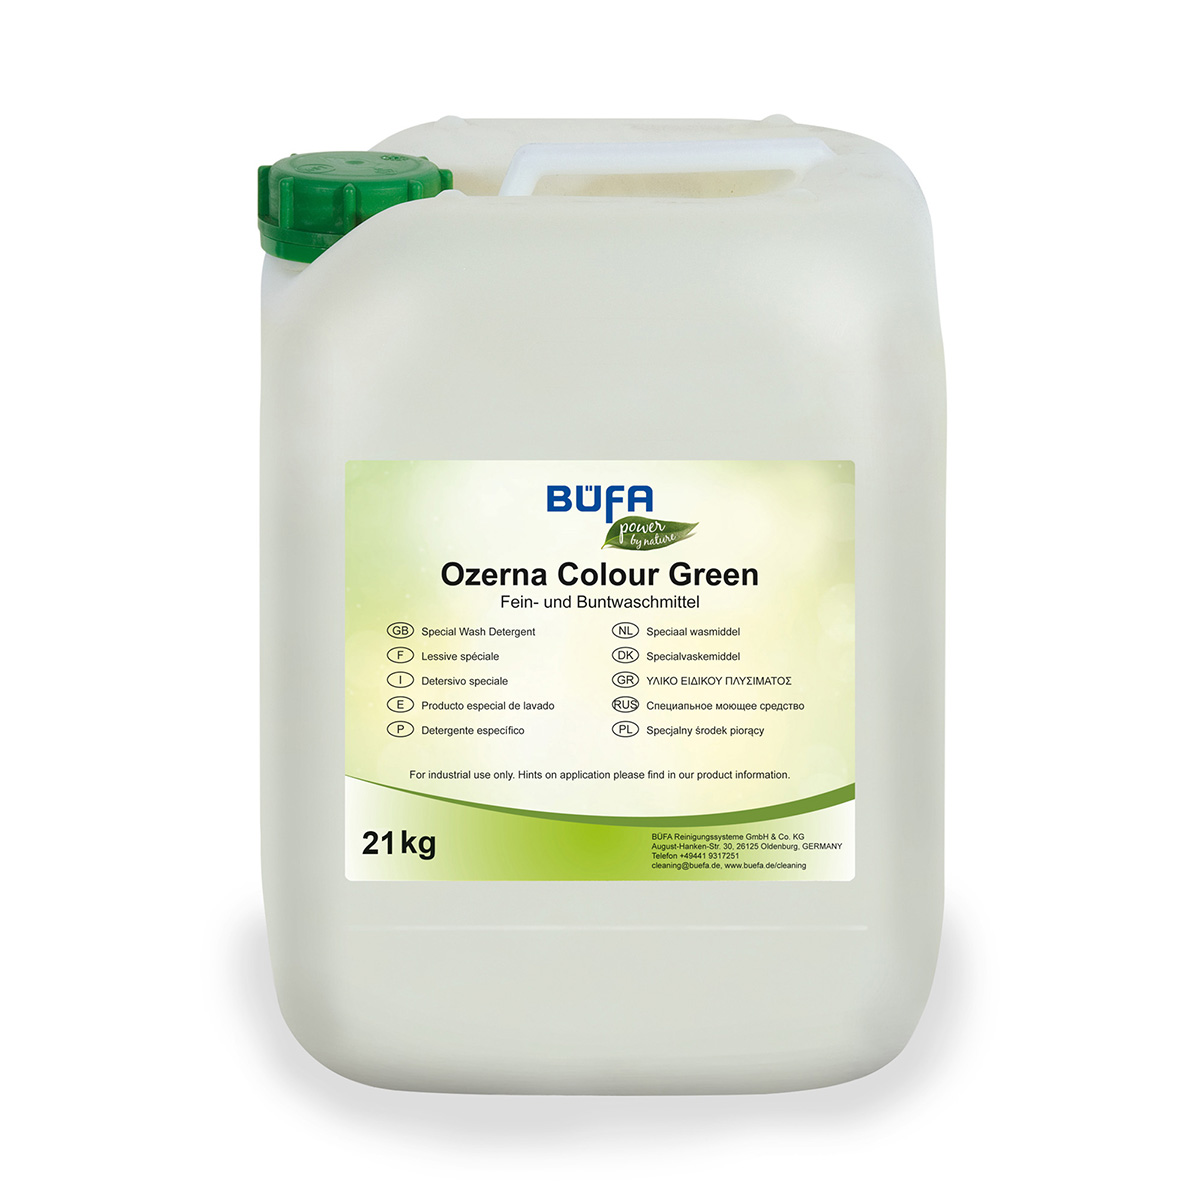 BÜFA Ozerna Colour Green Colorwaschmittel